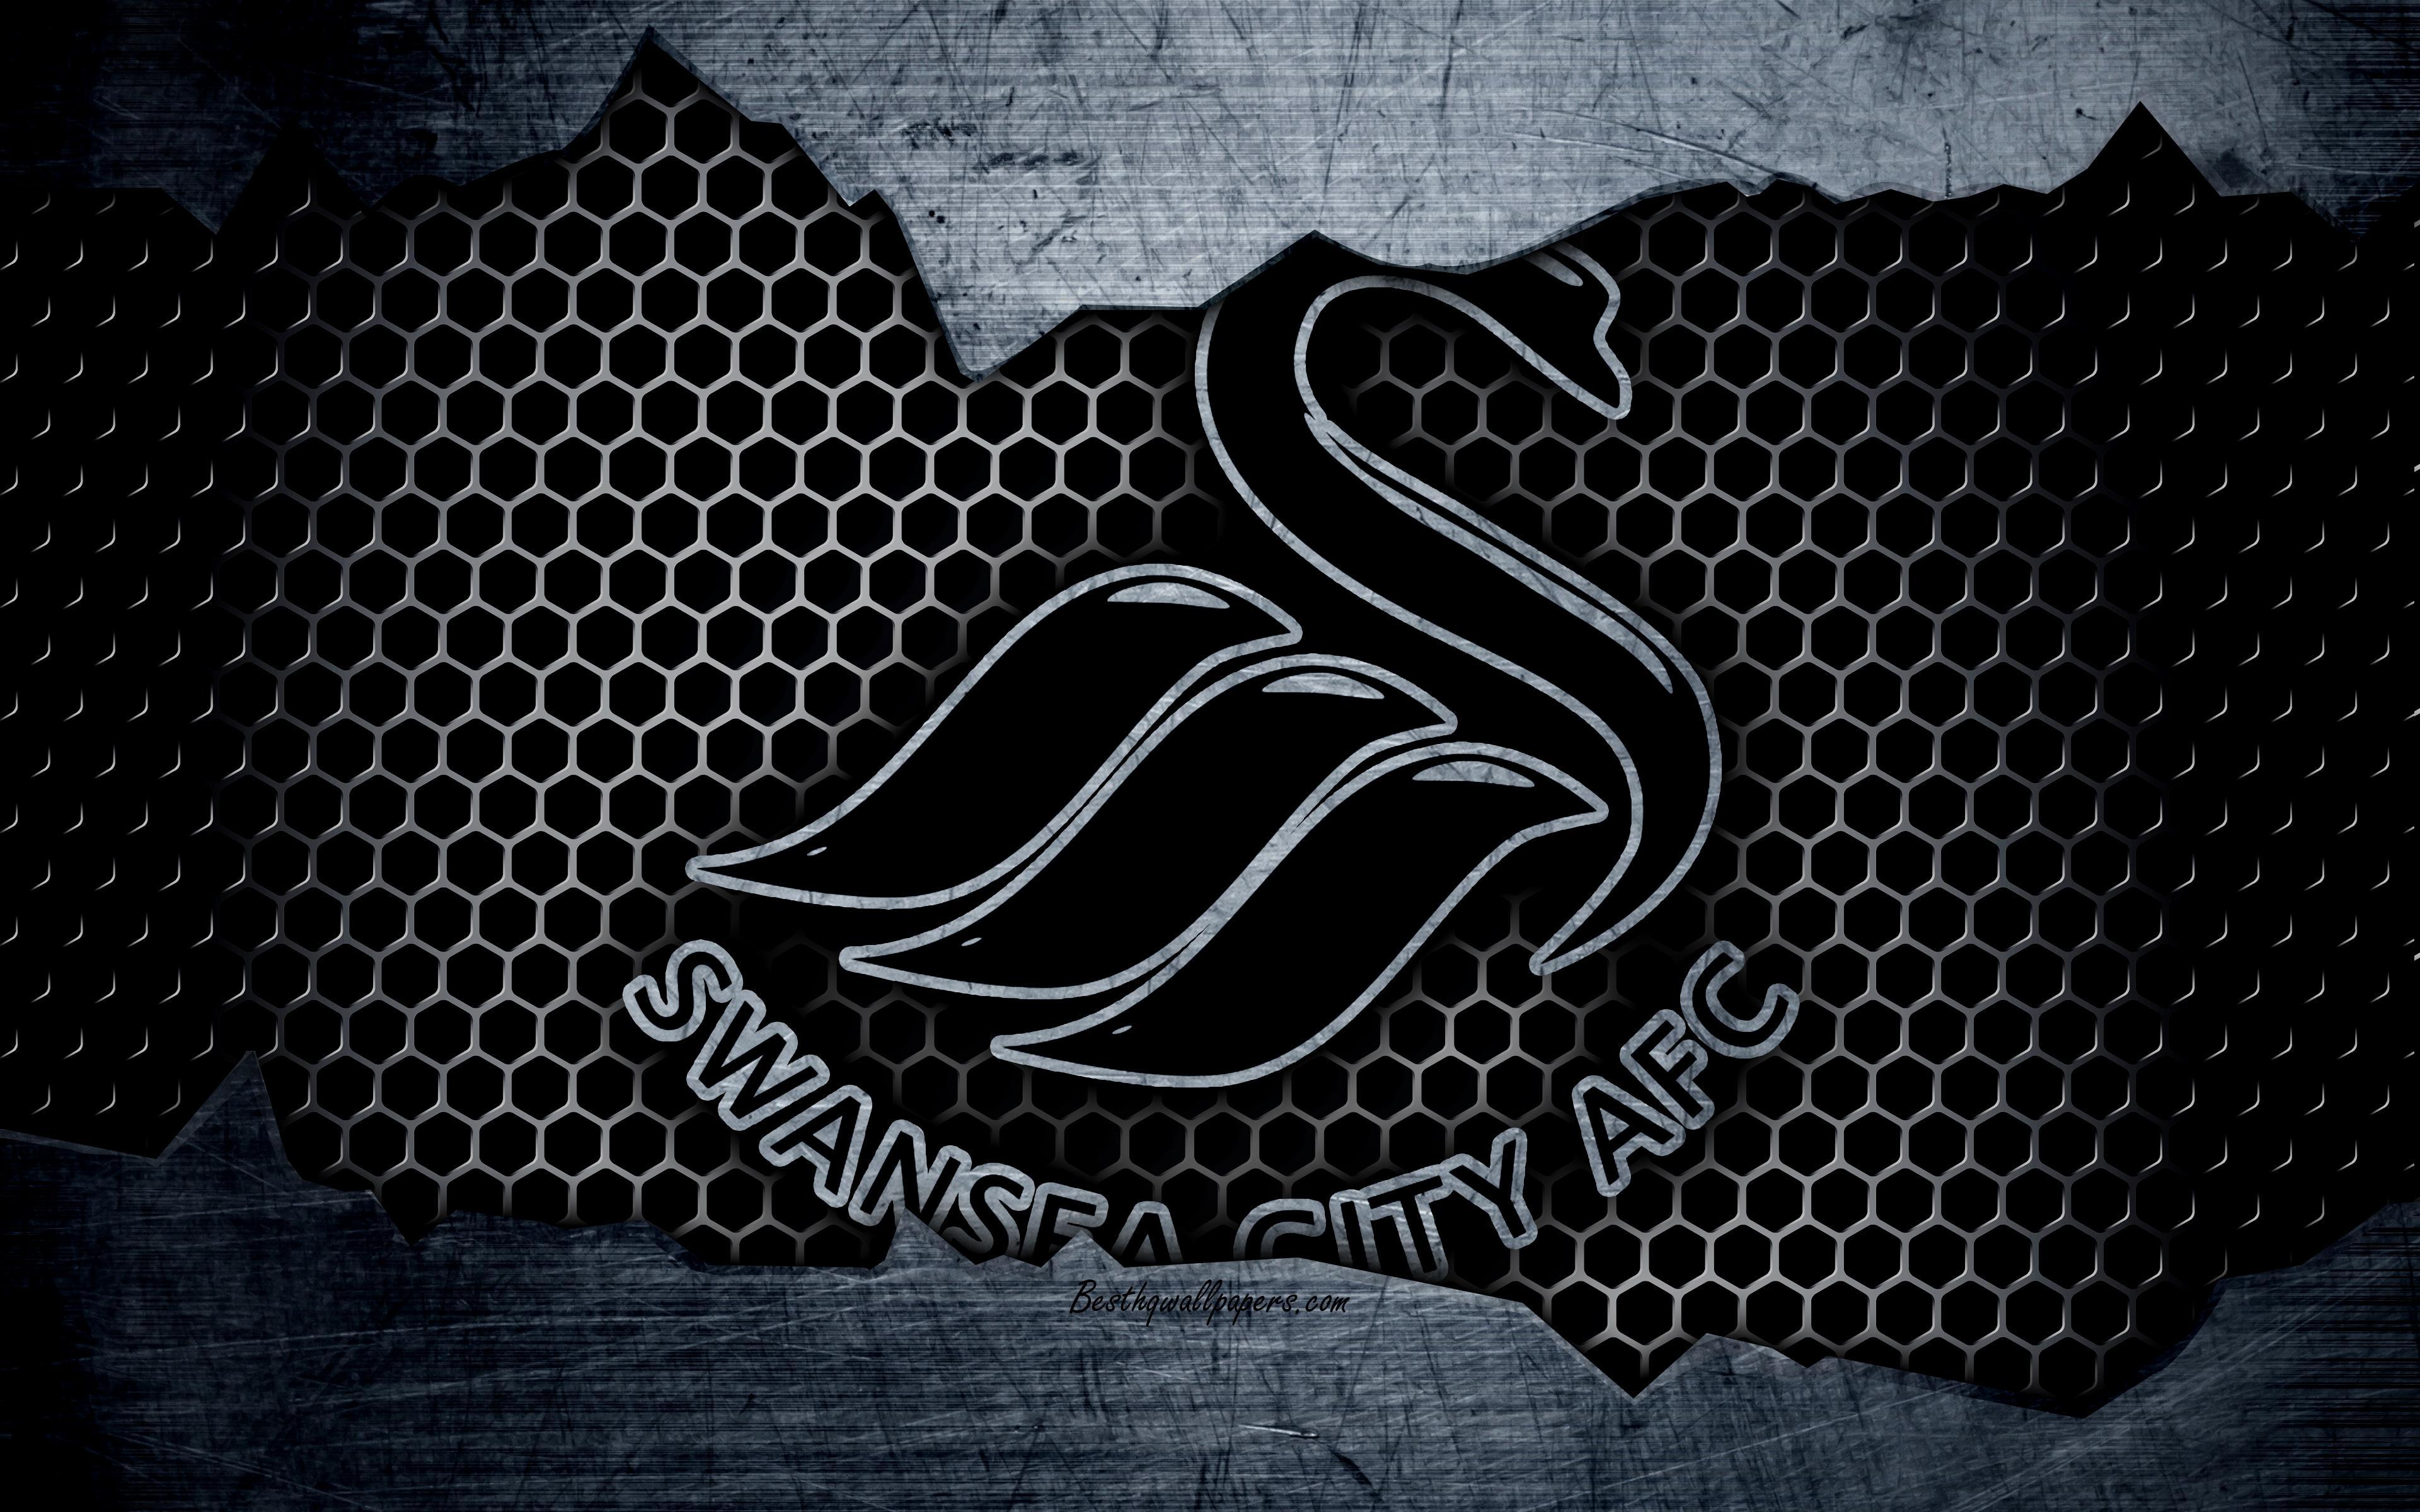 Download wallpaper Swansea City AFC, 4k, football, Premier